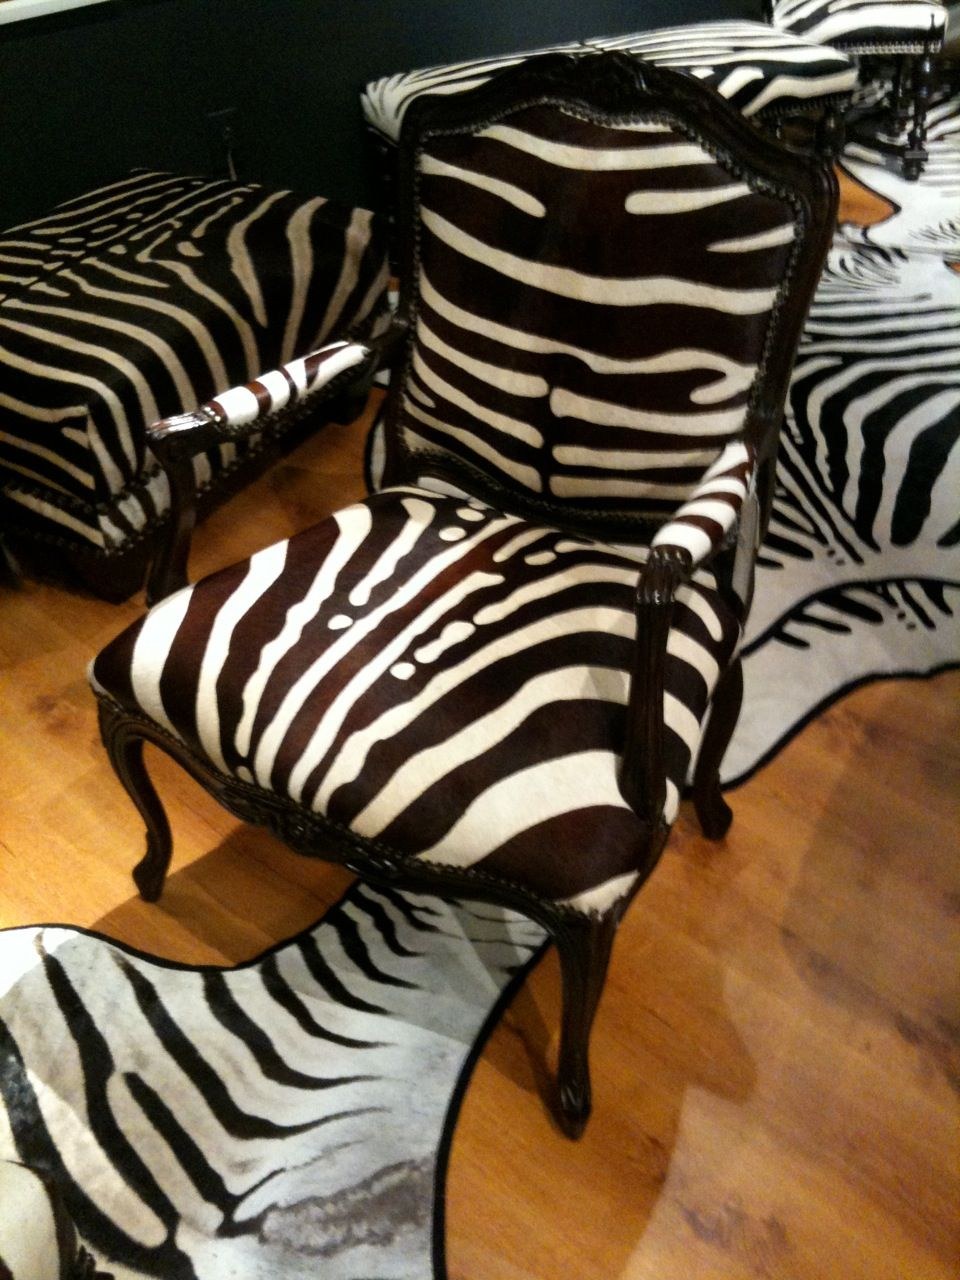 Зебра мебель. Стол Зебра. Декор мебели под зебру. Мебель из зебры в интерьере. Интерьер в Африканский стиле Зебра.